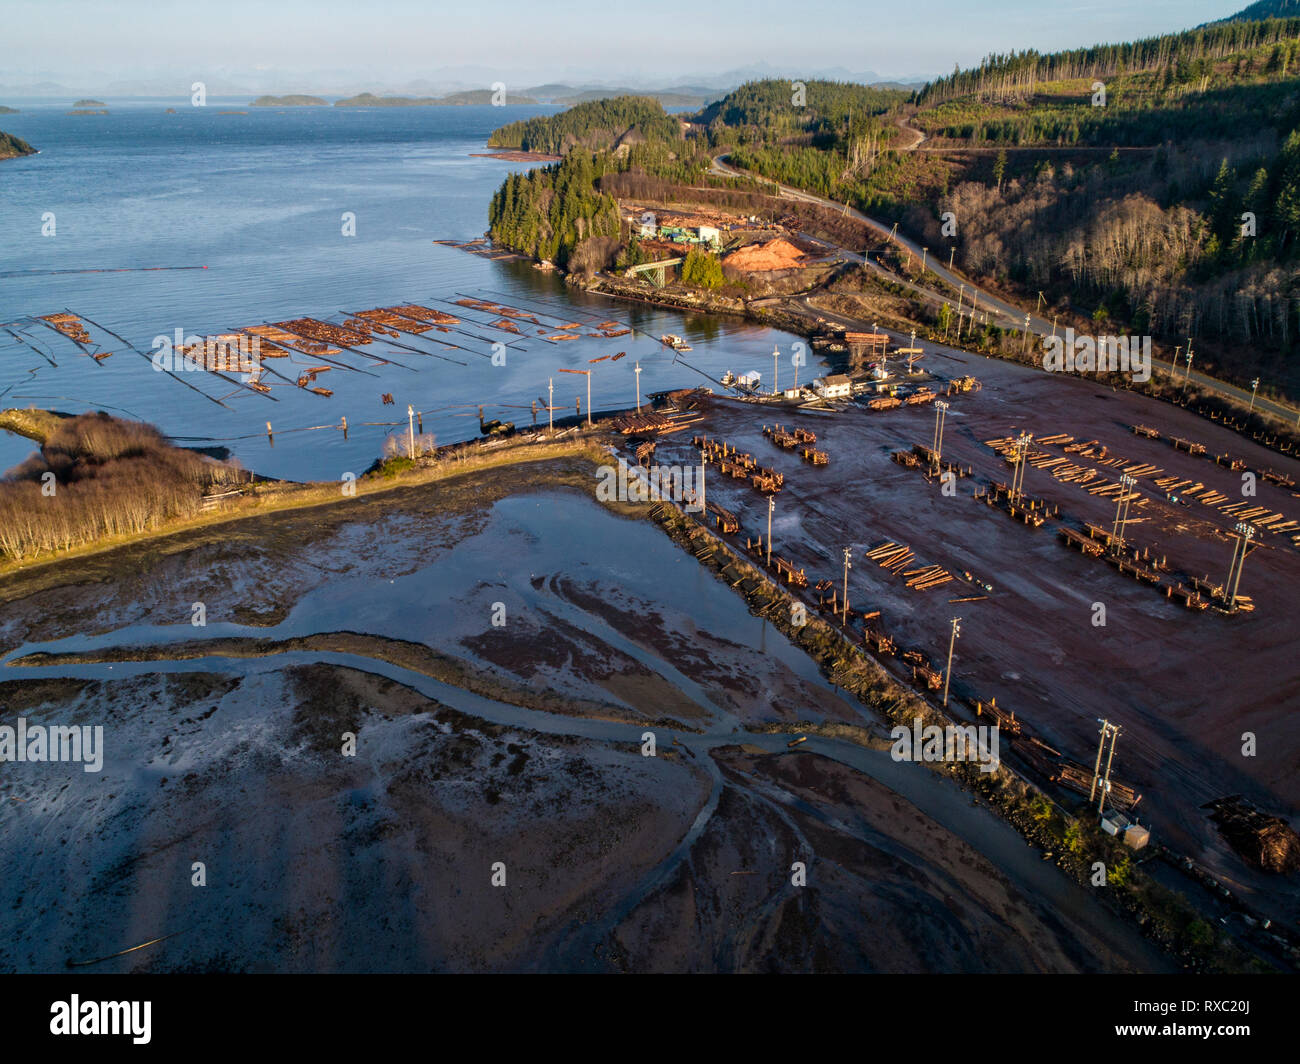 Vista aérea de troncos en el agua en Beaver Cove Log Ordenar cerca de Telegraph Cove, en el norte de la isla de Vancouver, British Columbia, Canadá. Foto de stock